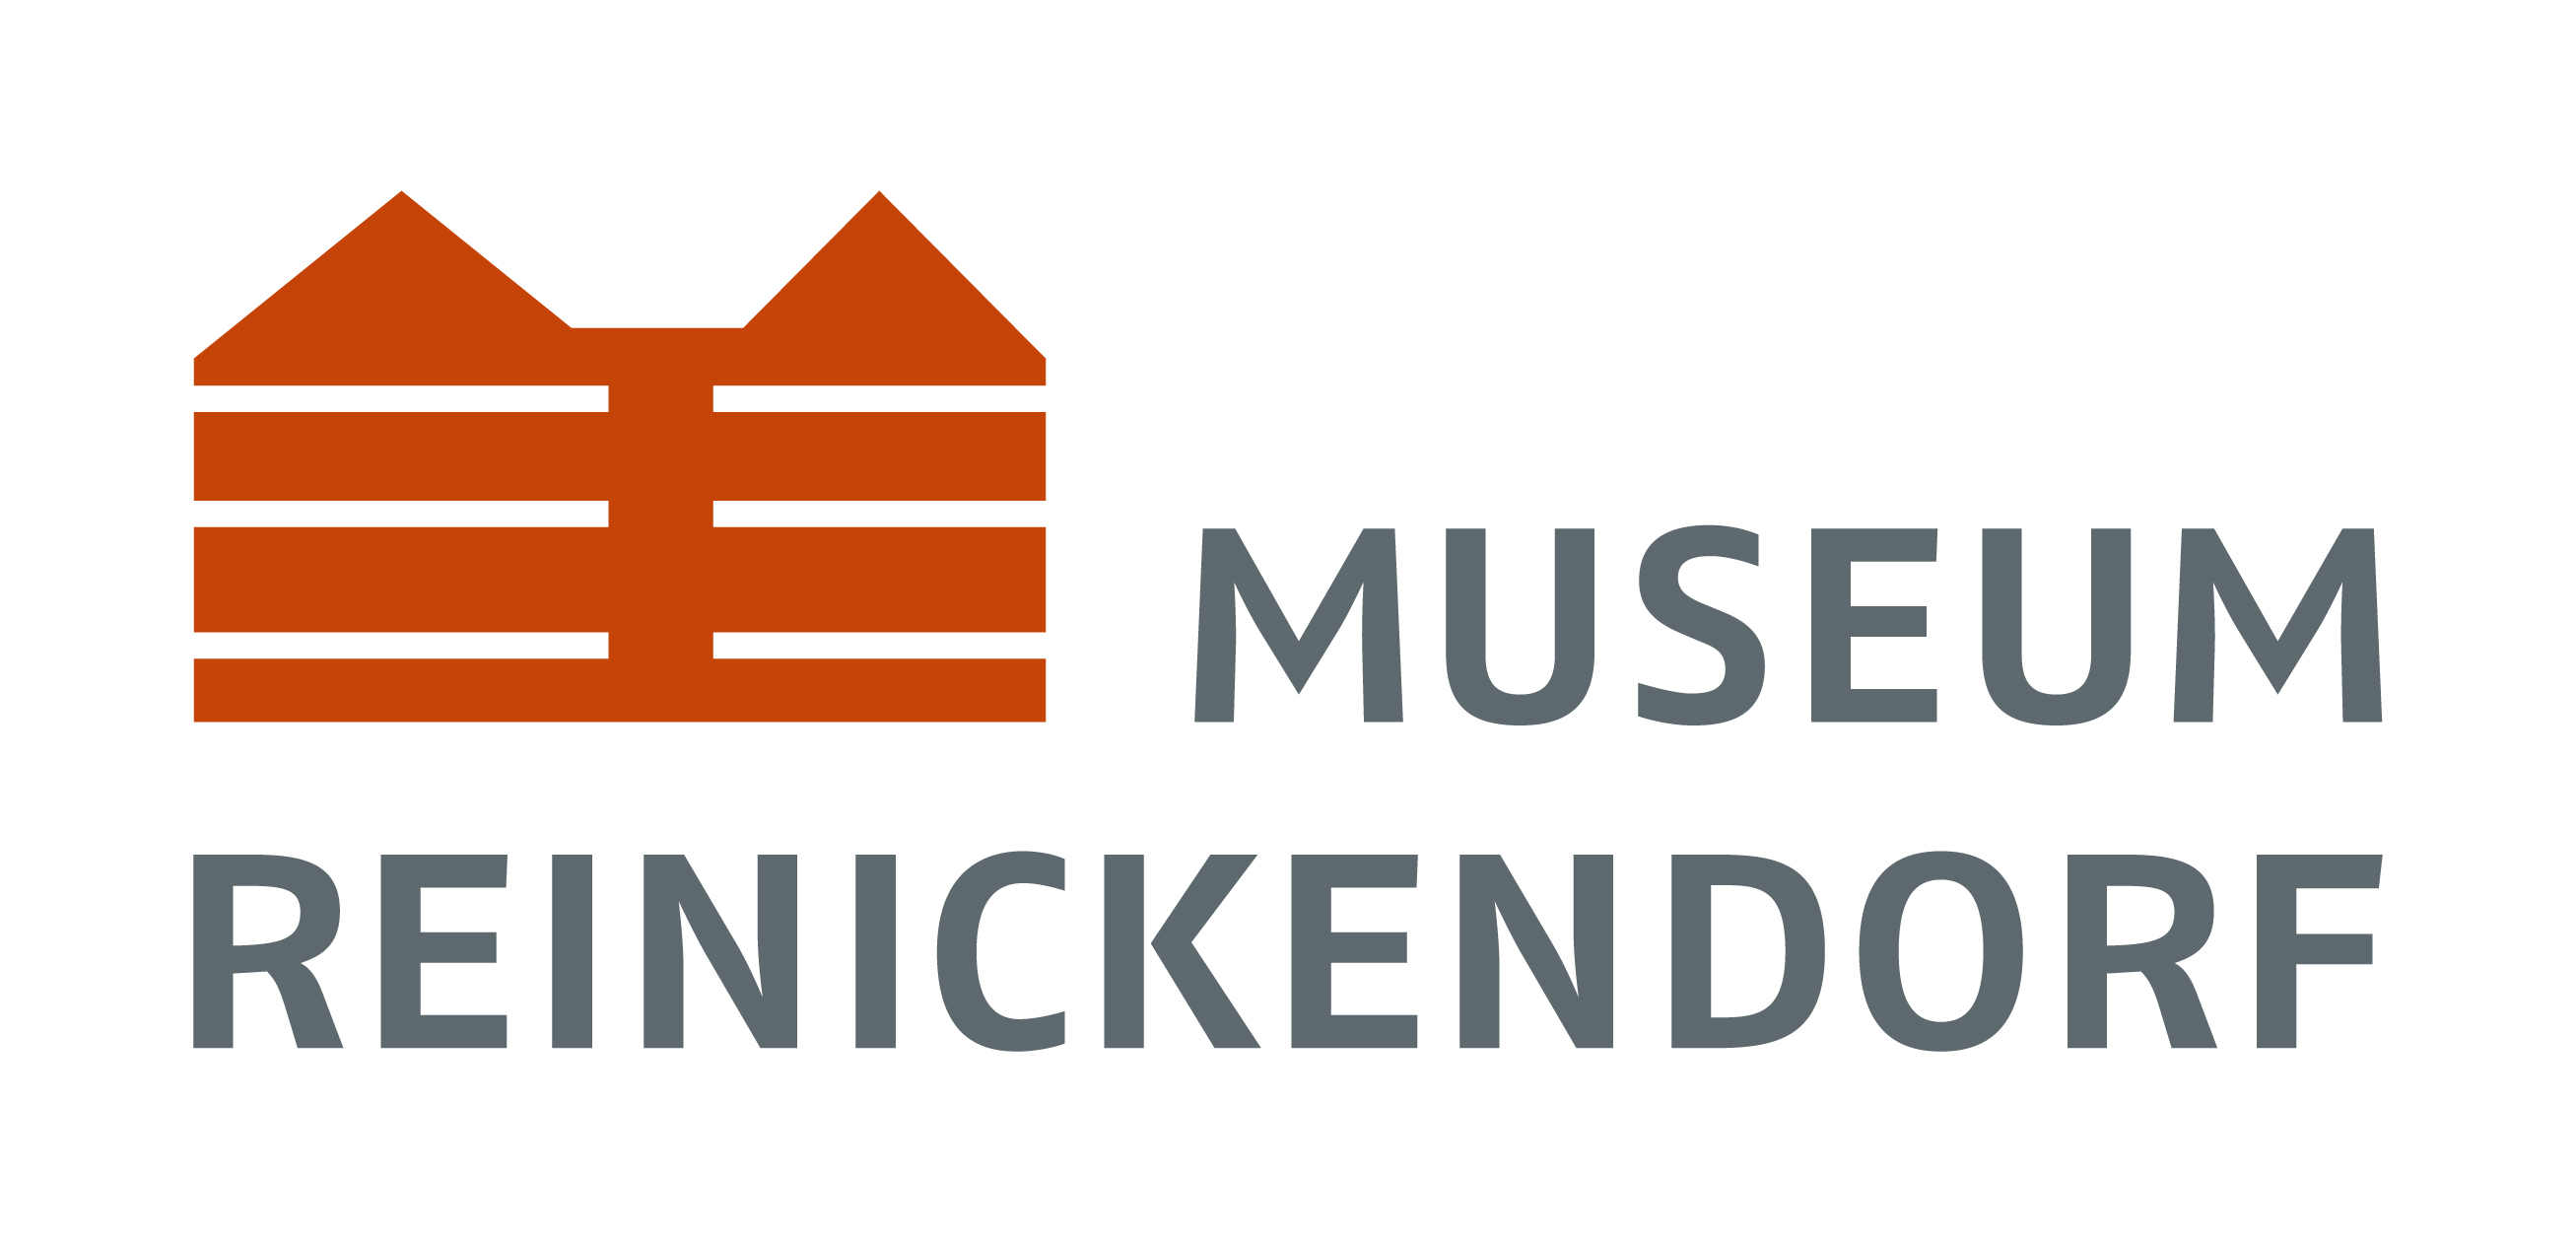 Museum reinickendorf